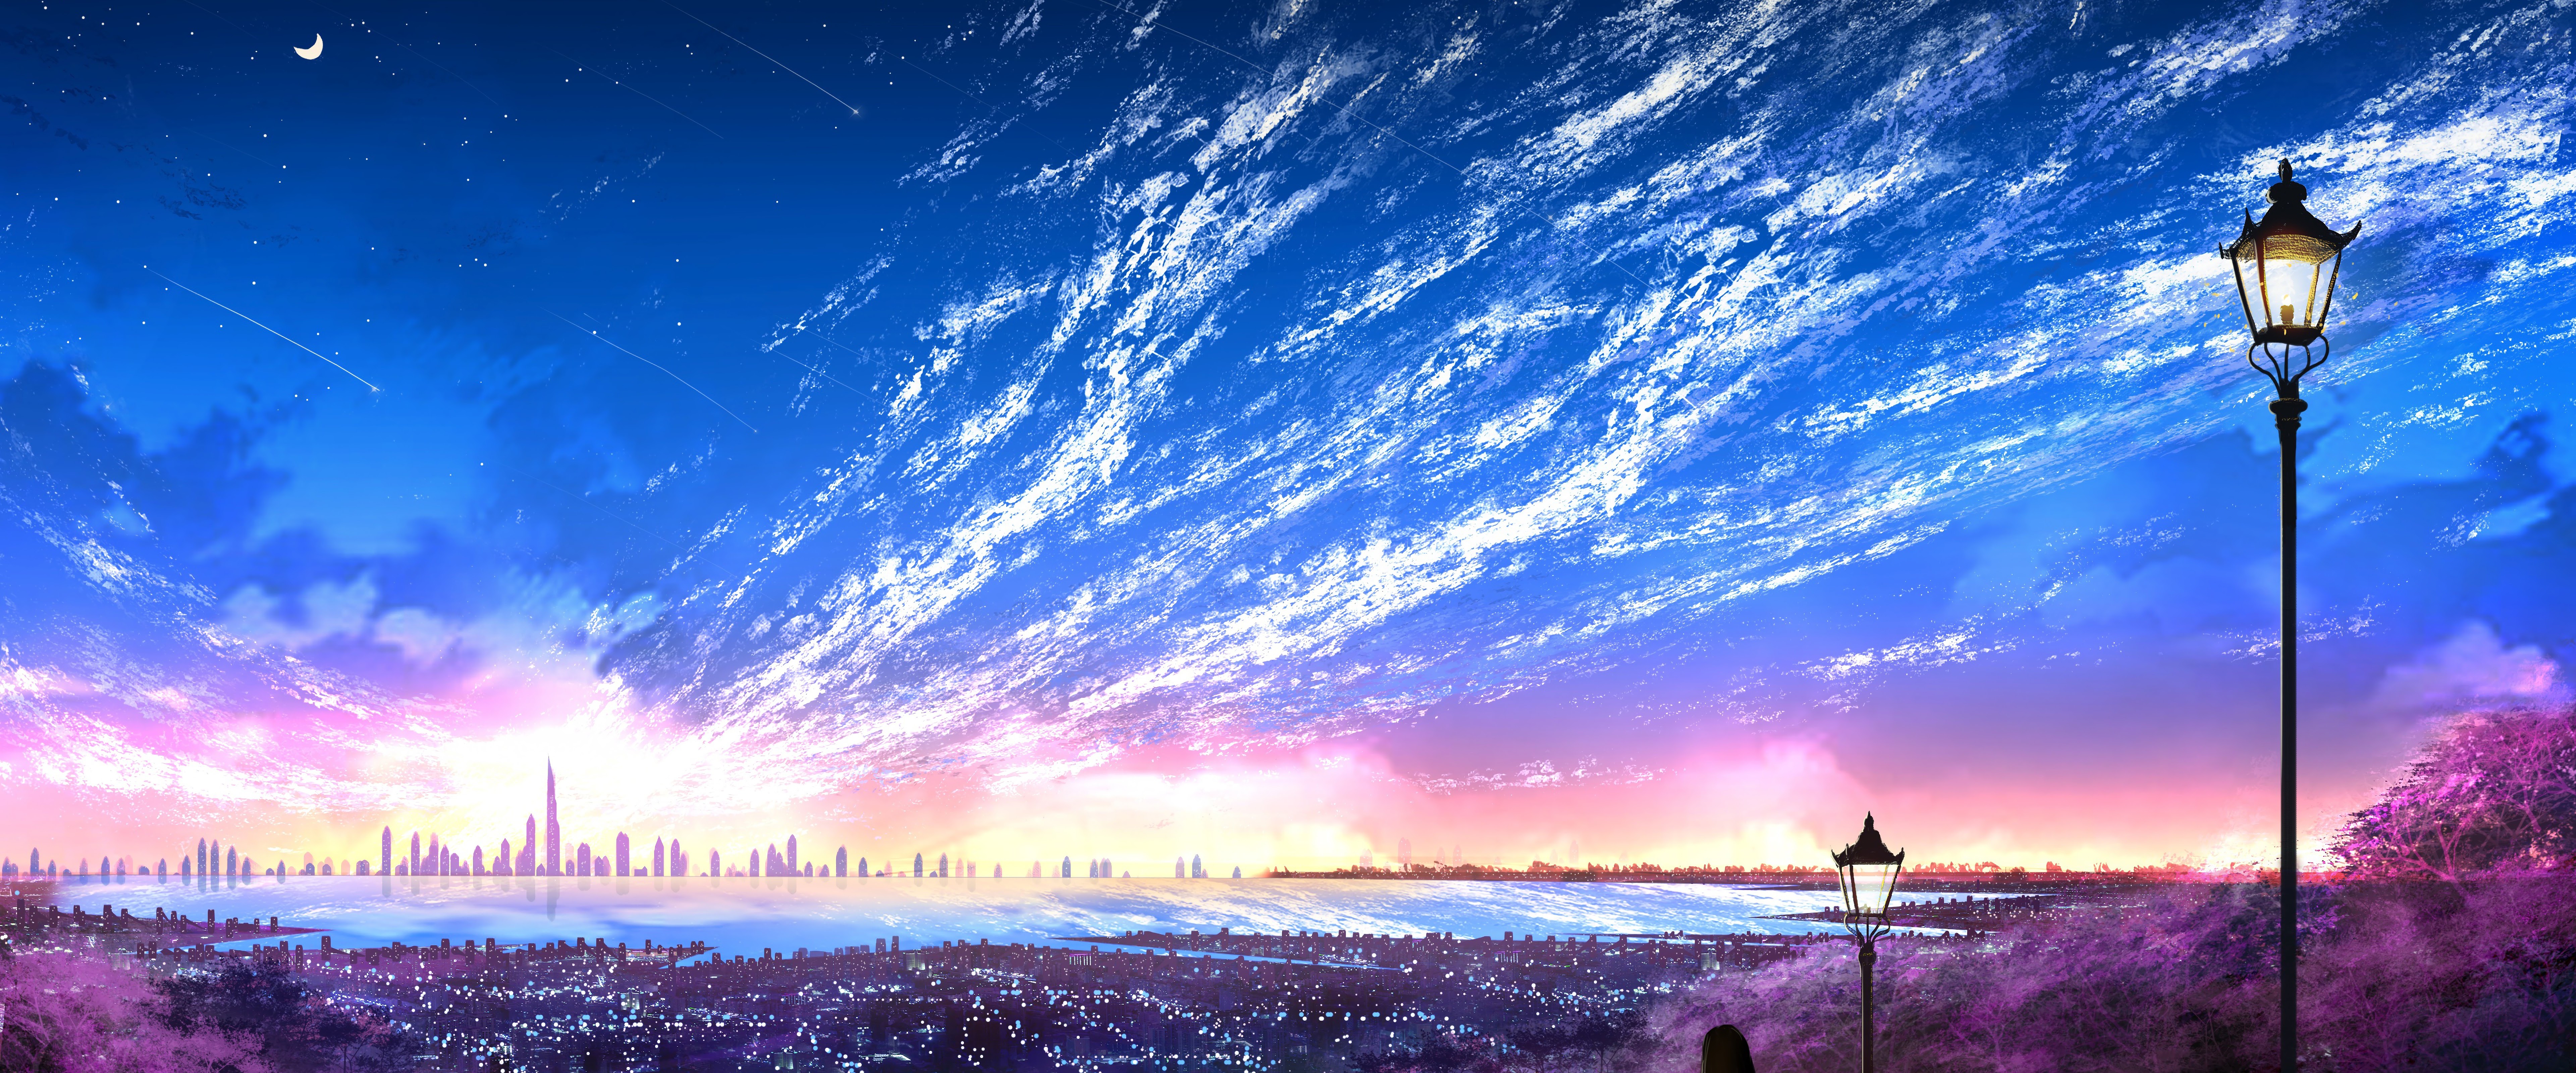 Sky City Scenery Horizon Landscape Anime 8K Wallpaper